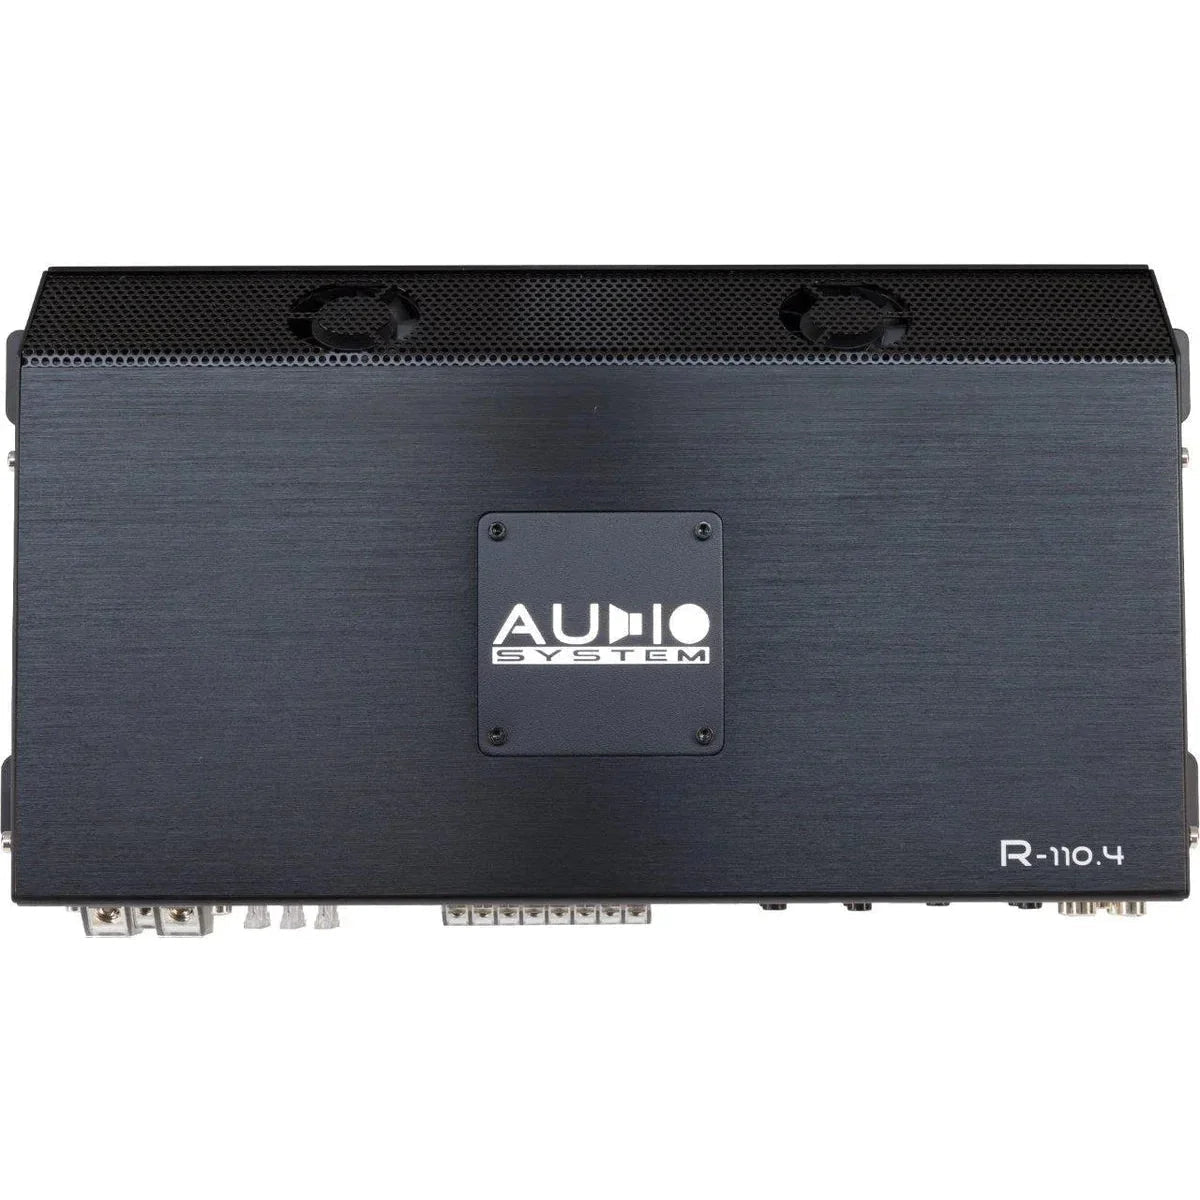 AUDIO SYSTEM Audio Komplettset EVOKomplettset SET R-Series System